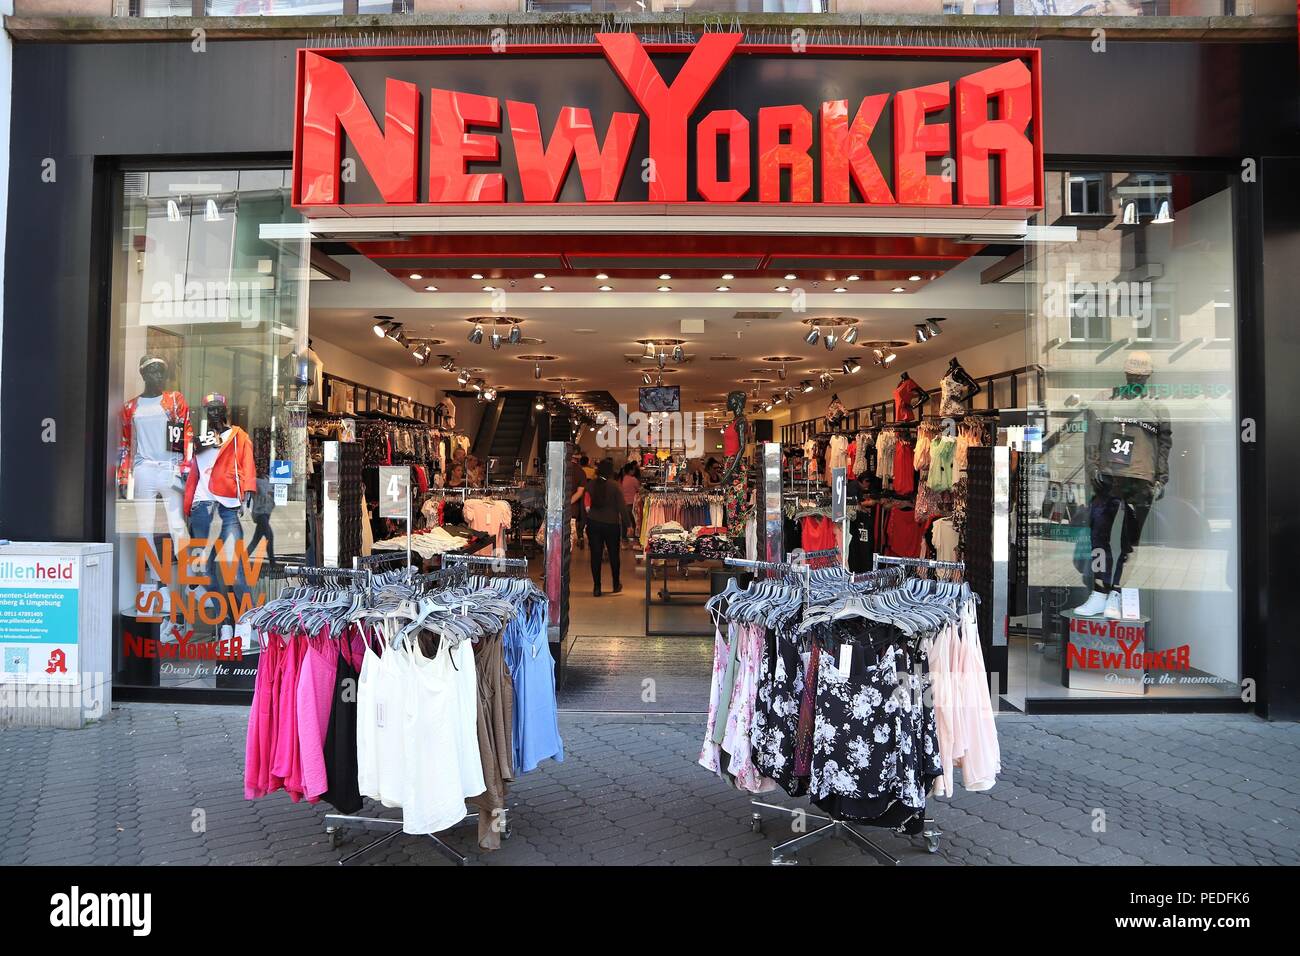 New yorker каталог товаров. Нью йоркер. Бренд New Yorker. New Yorker одежда. Нью йоркер чей бренд.